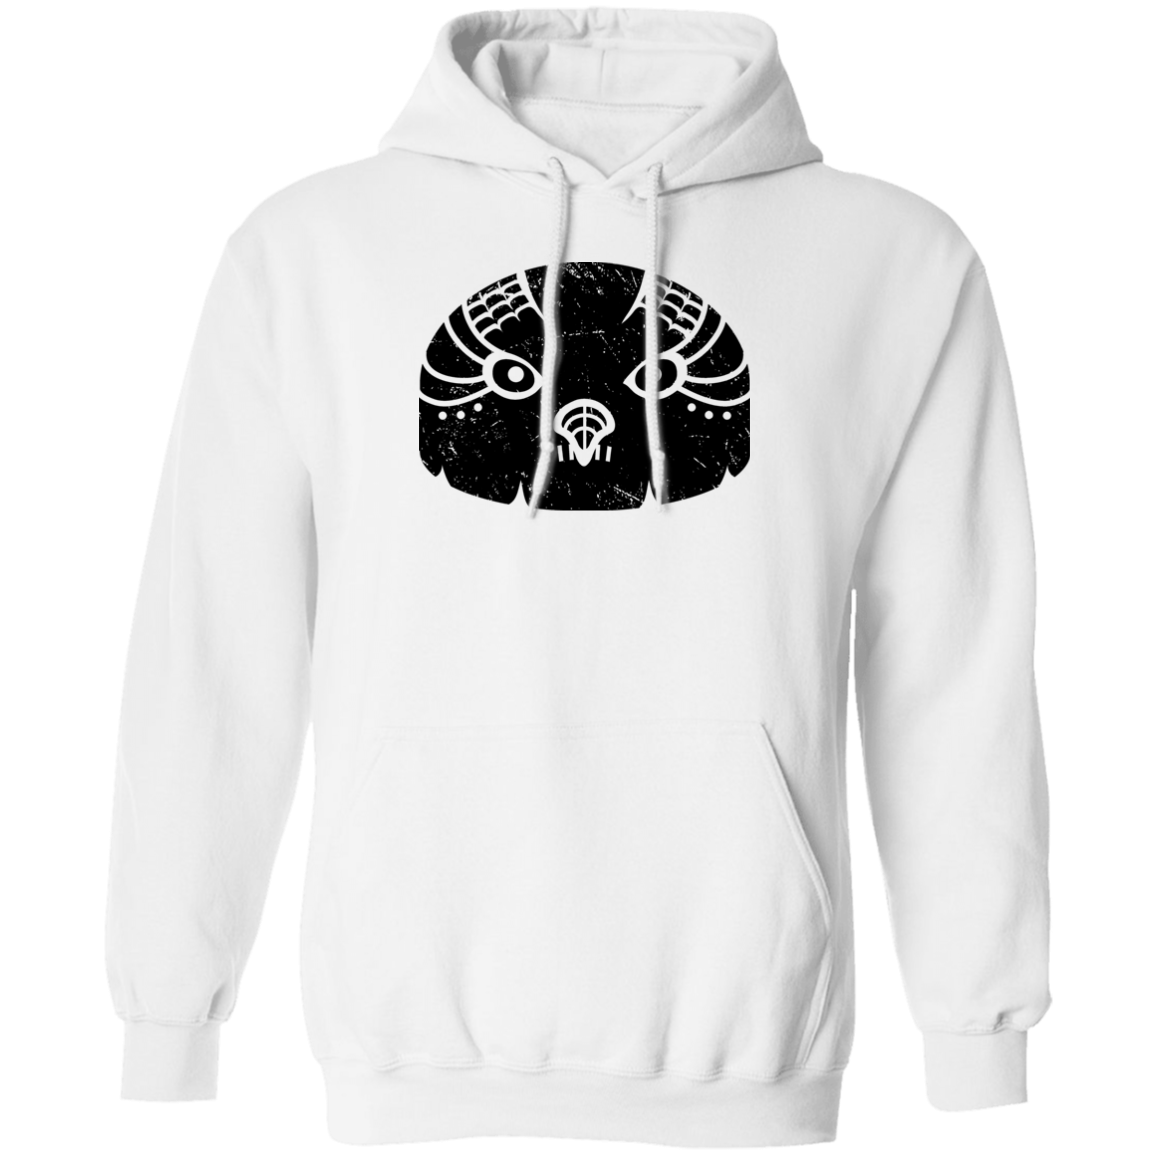 Black Distressed Emblem Hoodies for Adults (Snow Owl/Valor)